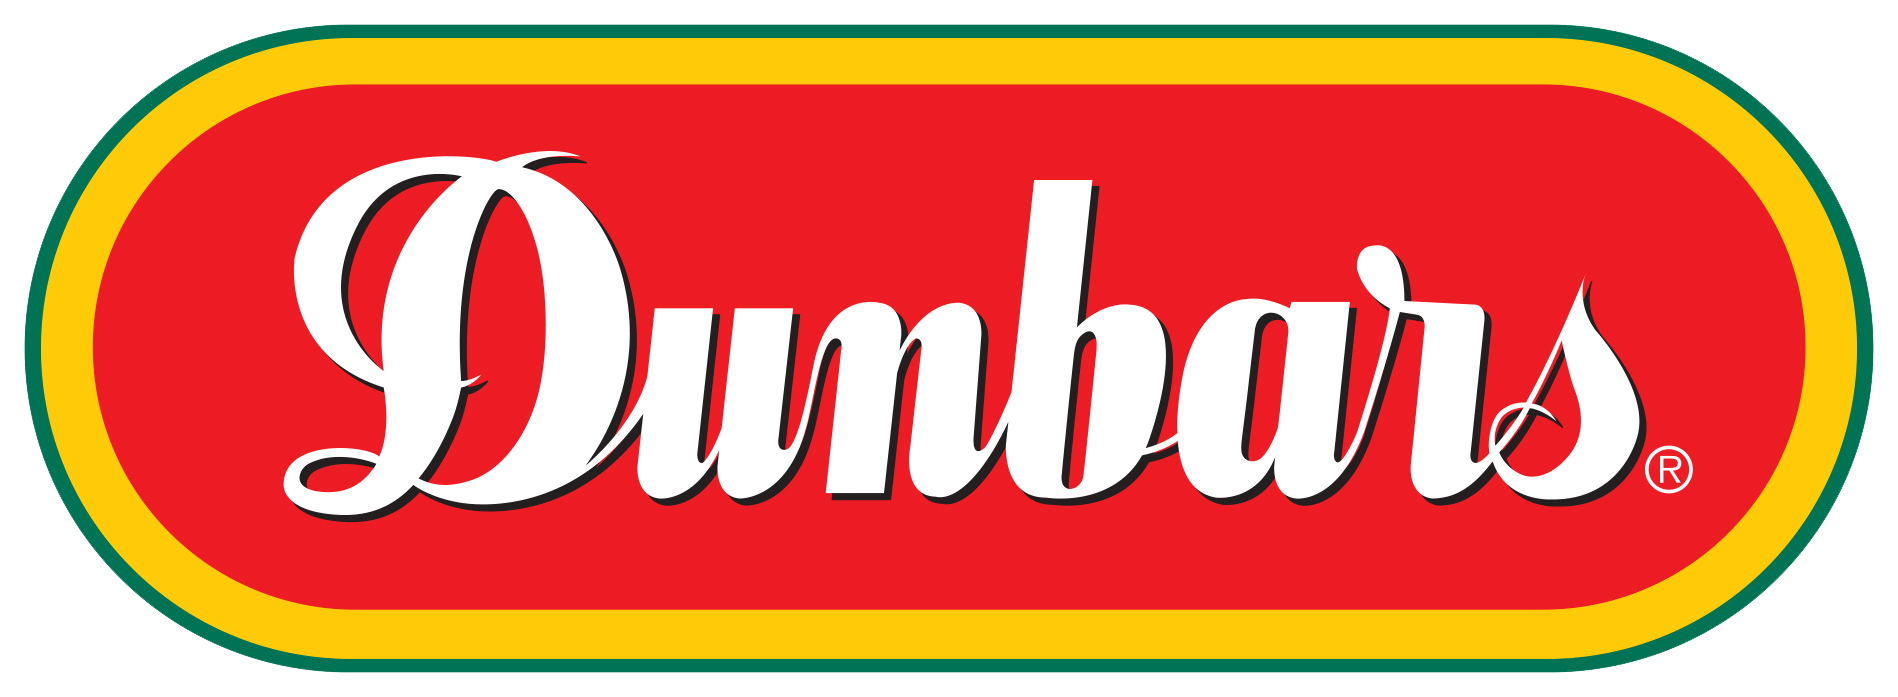 Dunbar Logo - Home. Moody Dunbar, Inc